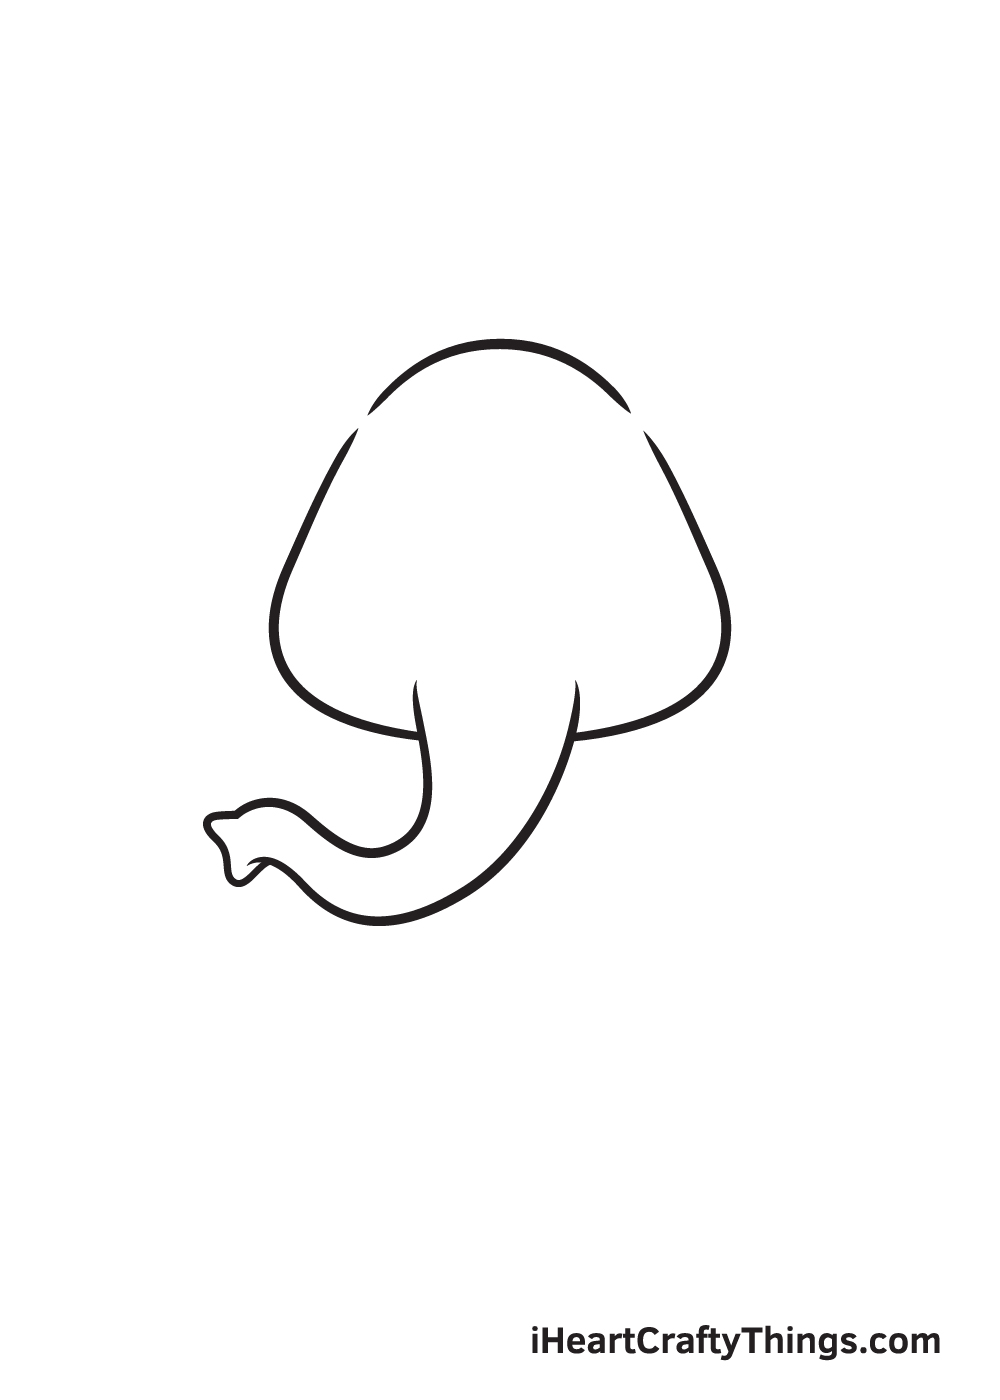 Vẽ con voi - Bước 1